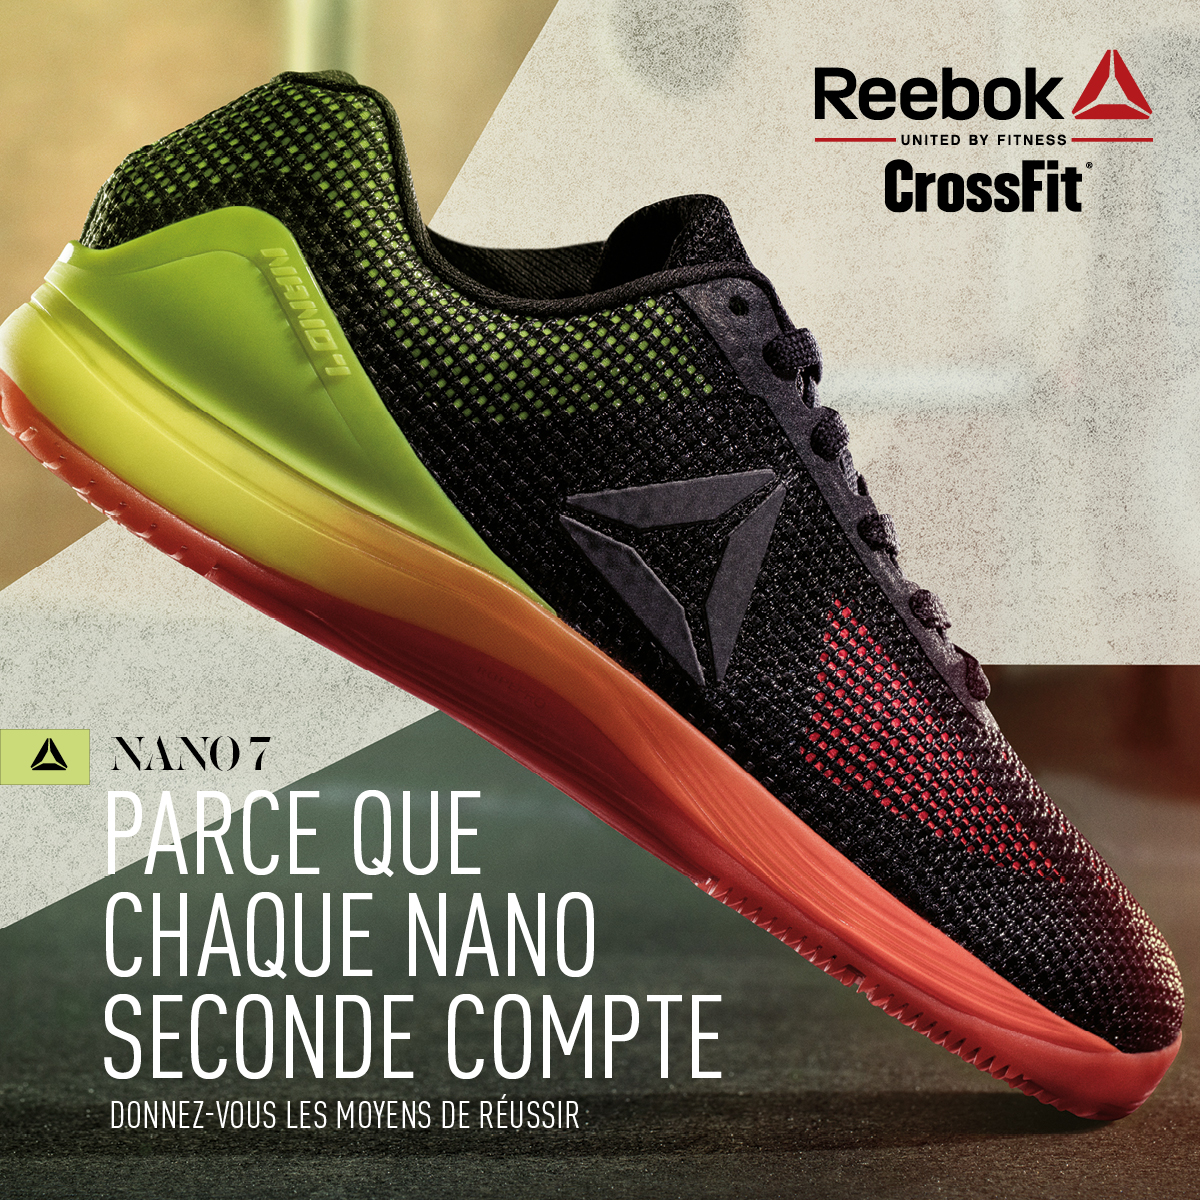 Duplicatie stoel joggen La nouvelle chaussure de crossfit Reebok : la Nano 7.0 - U Run